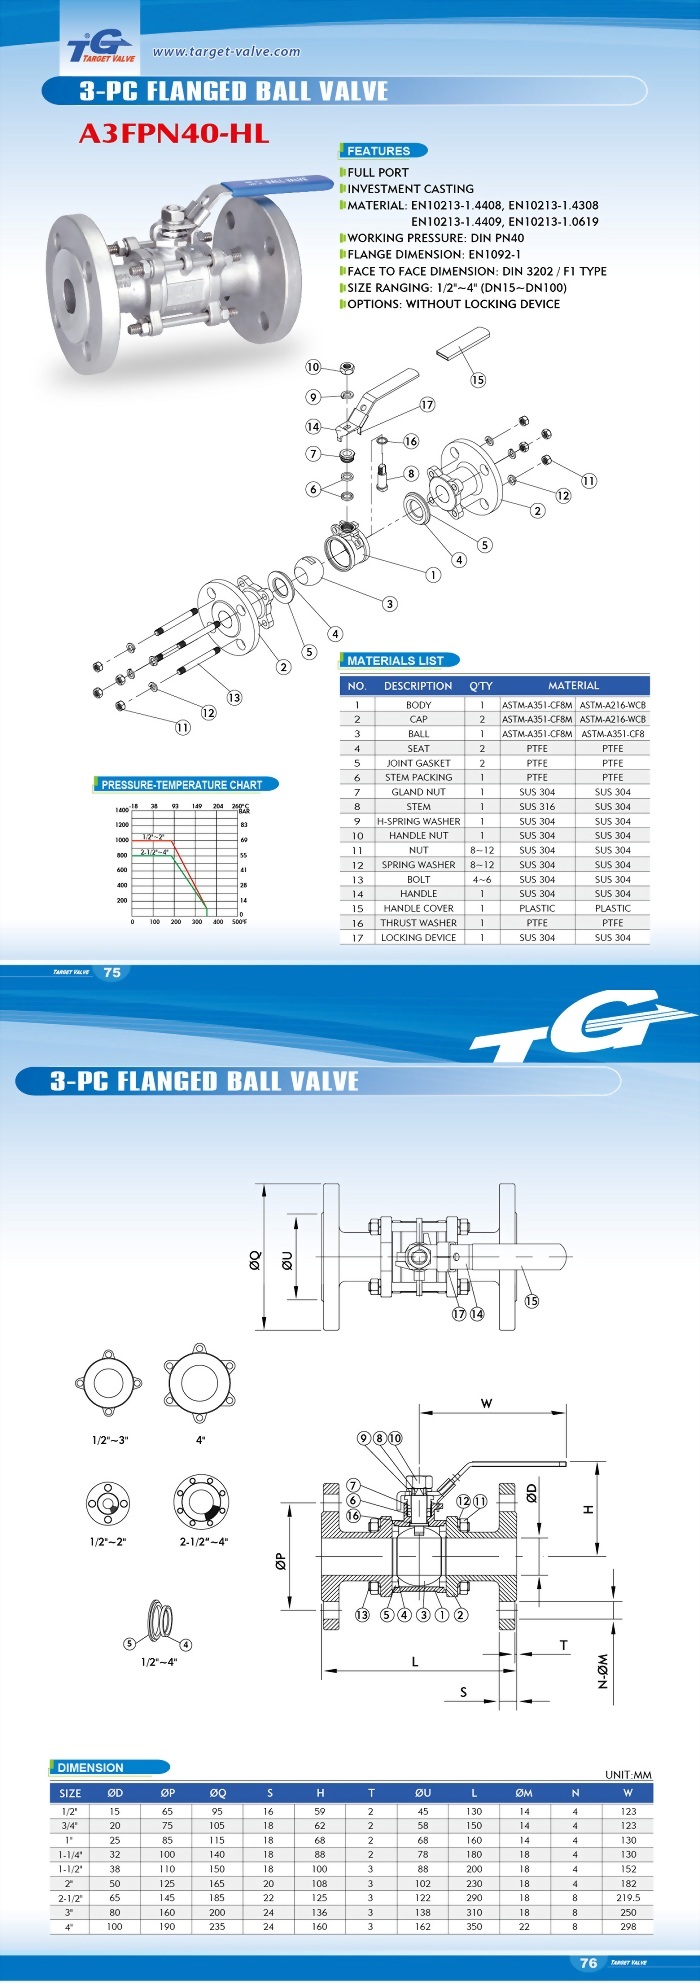 3 PC FLANGED BALL VALVE - A3FPN40